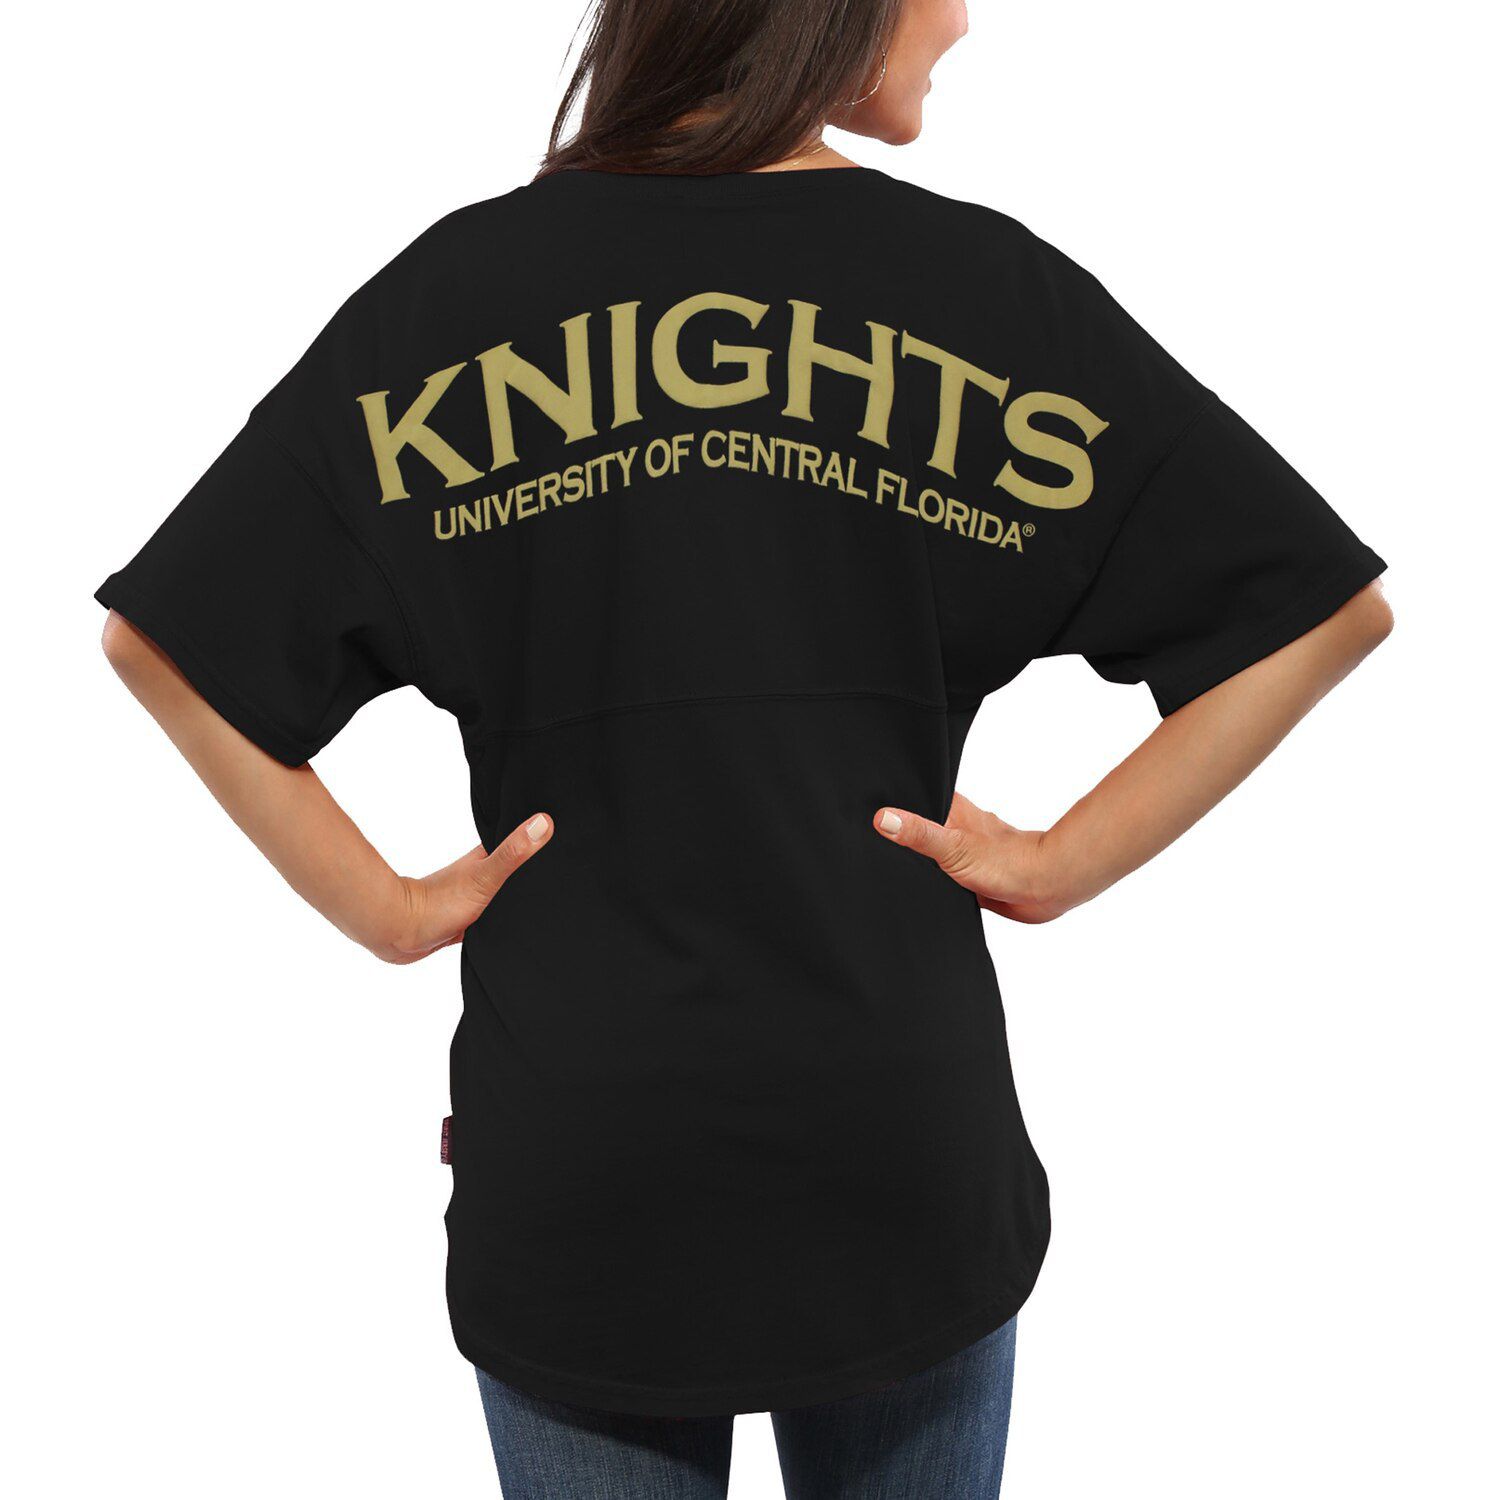 ucf knights jersey